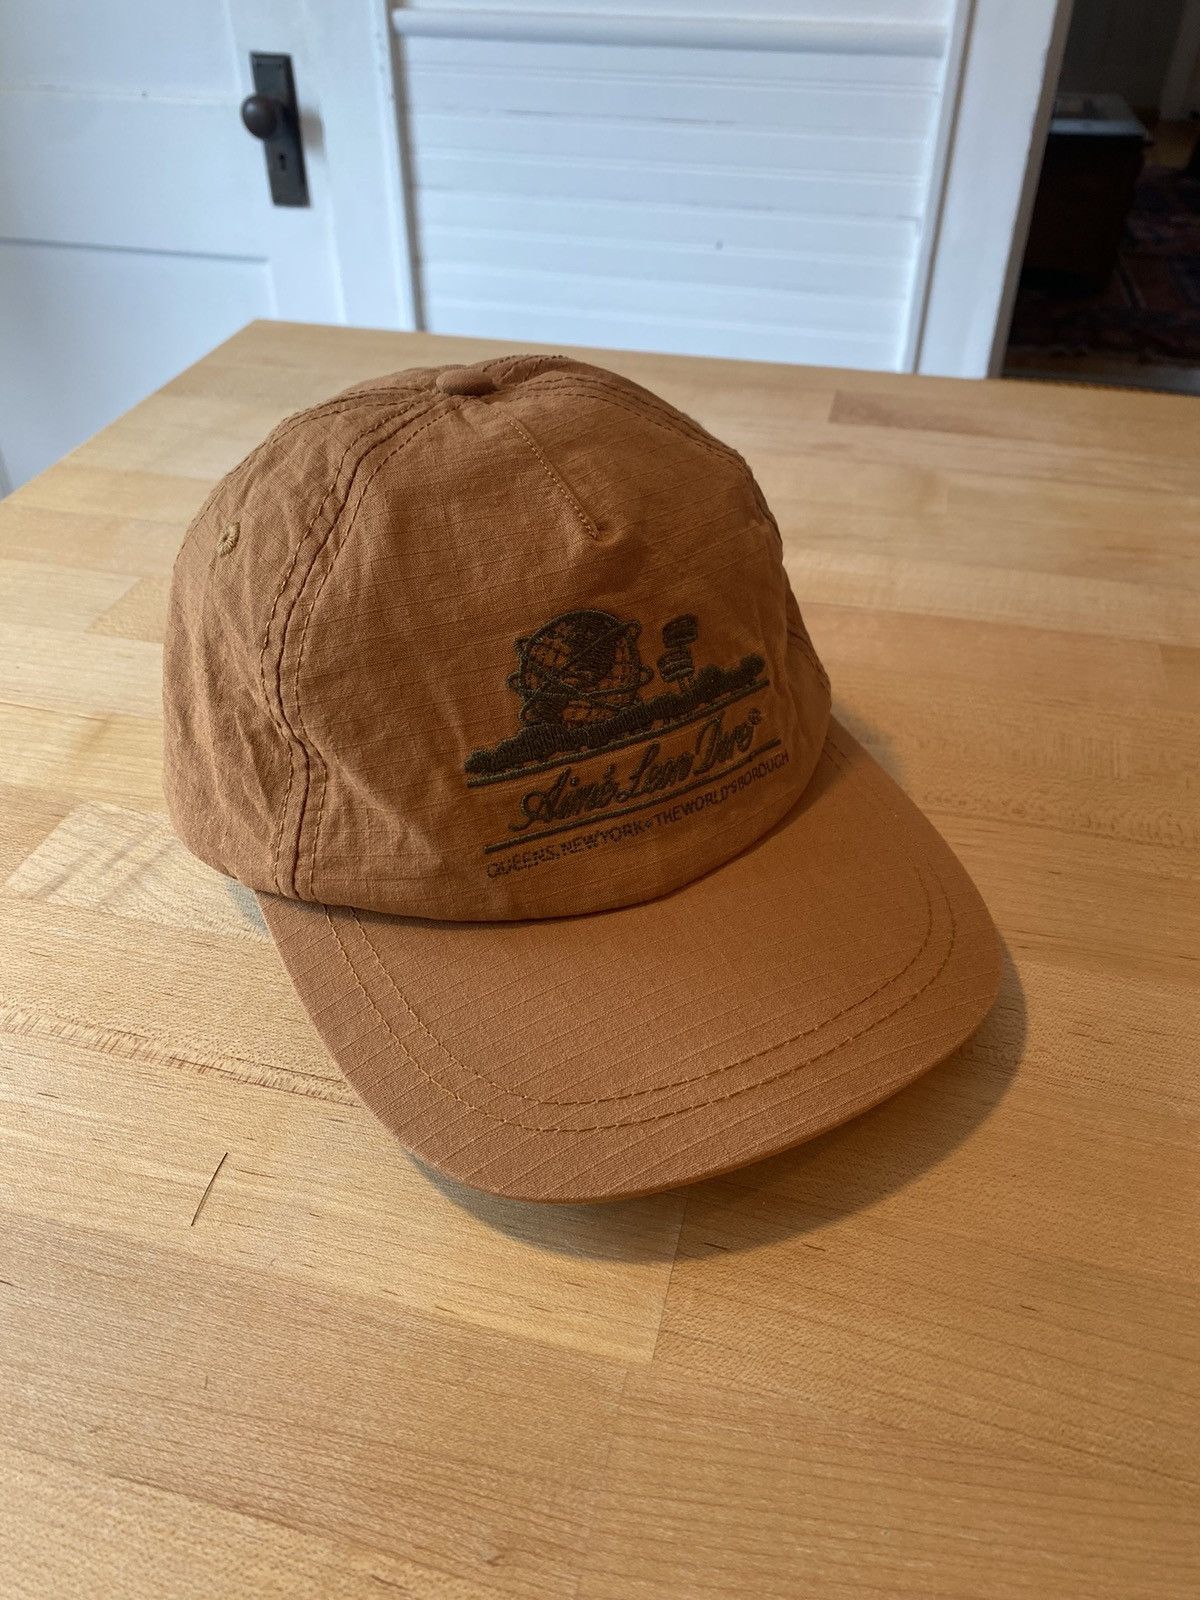 Vintage Polo Ralph Lauren Fly Fishing Bucket Hat RARE brown corduroy cord L- XL